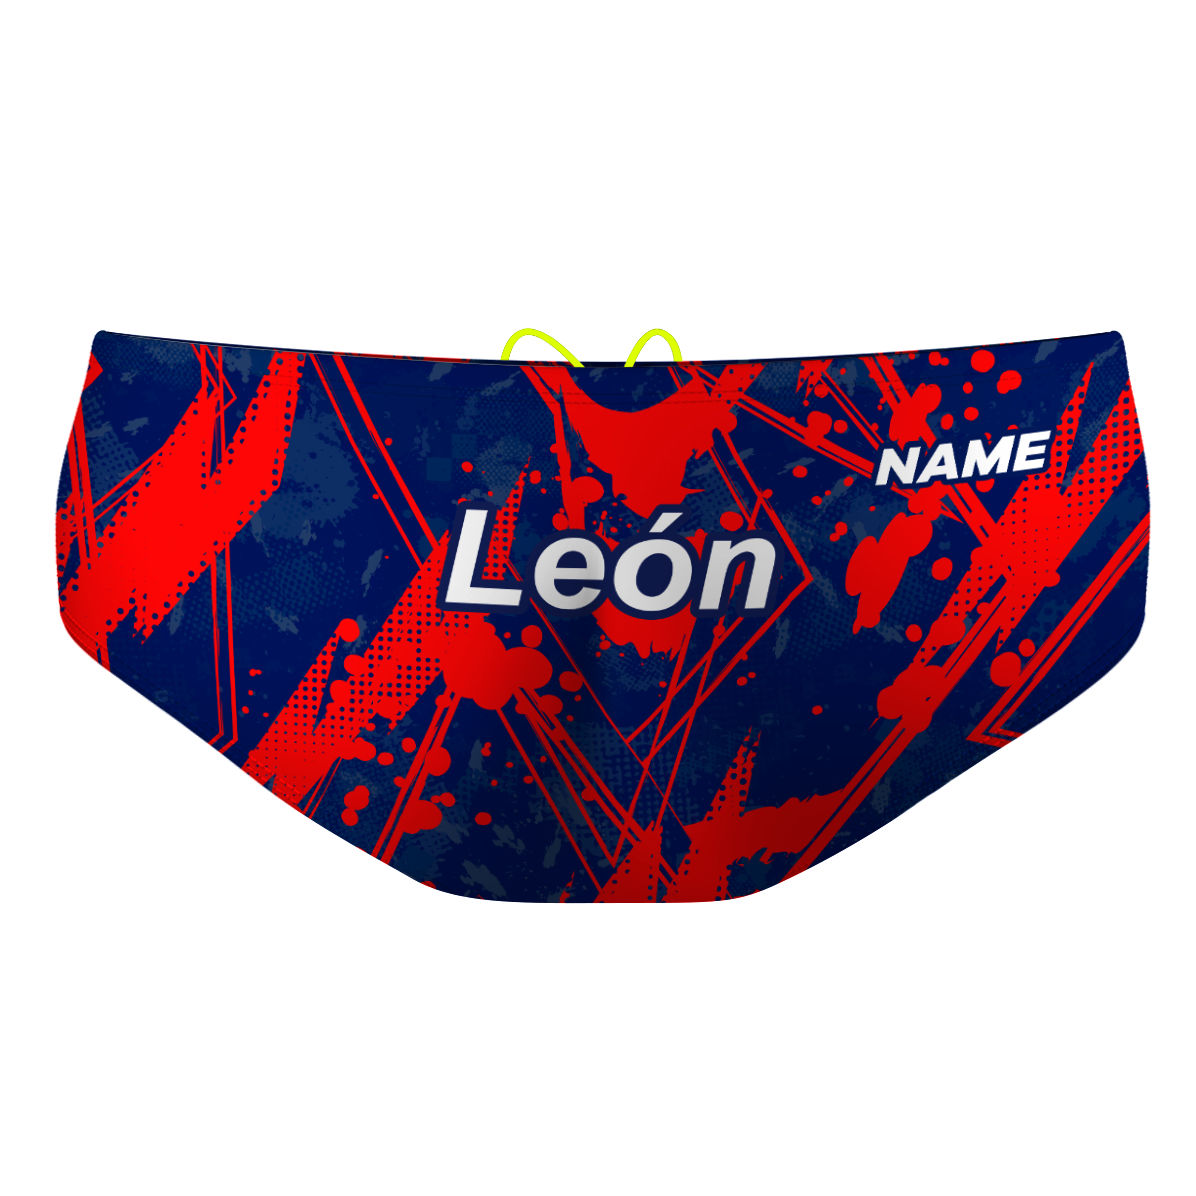 NV León - Classic Brief Swimsuit